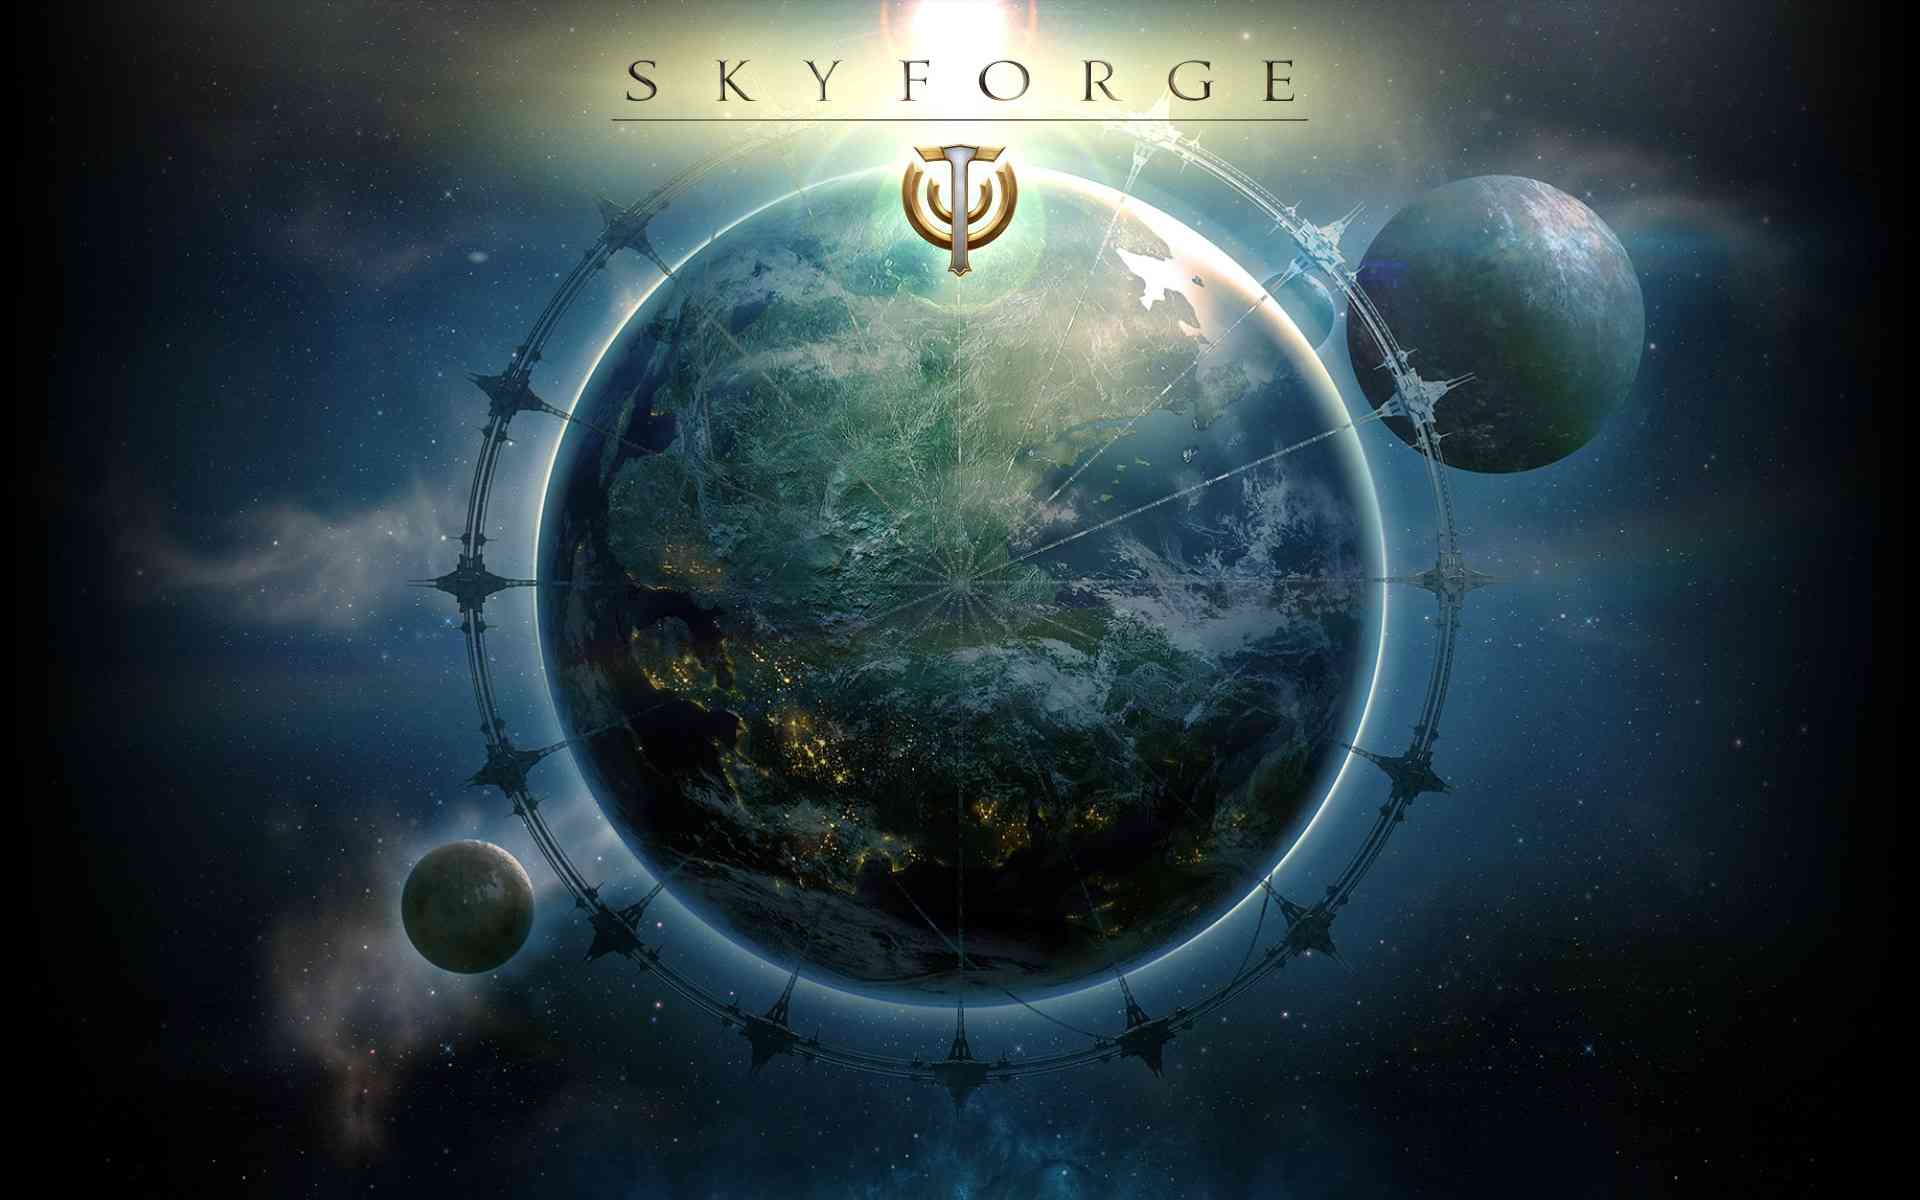 skyforge website download free